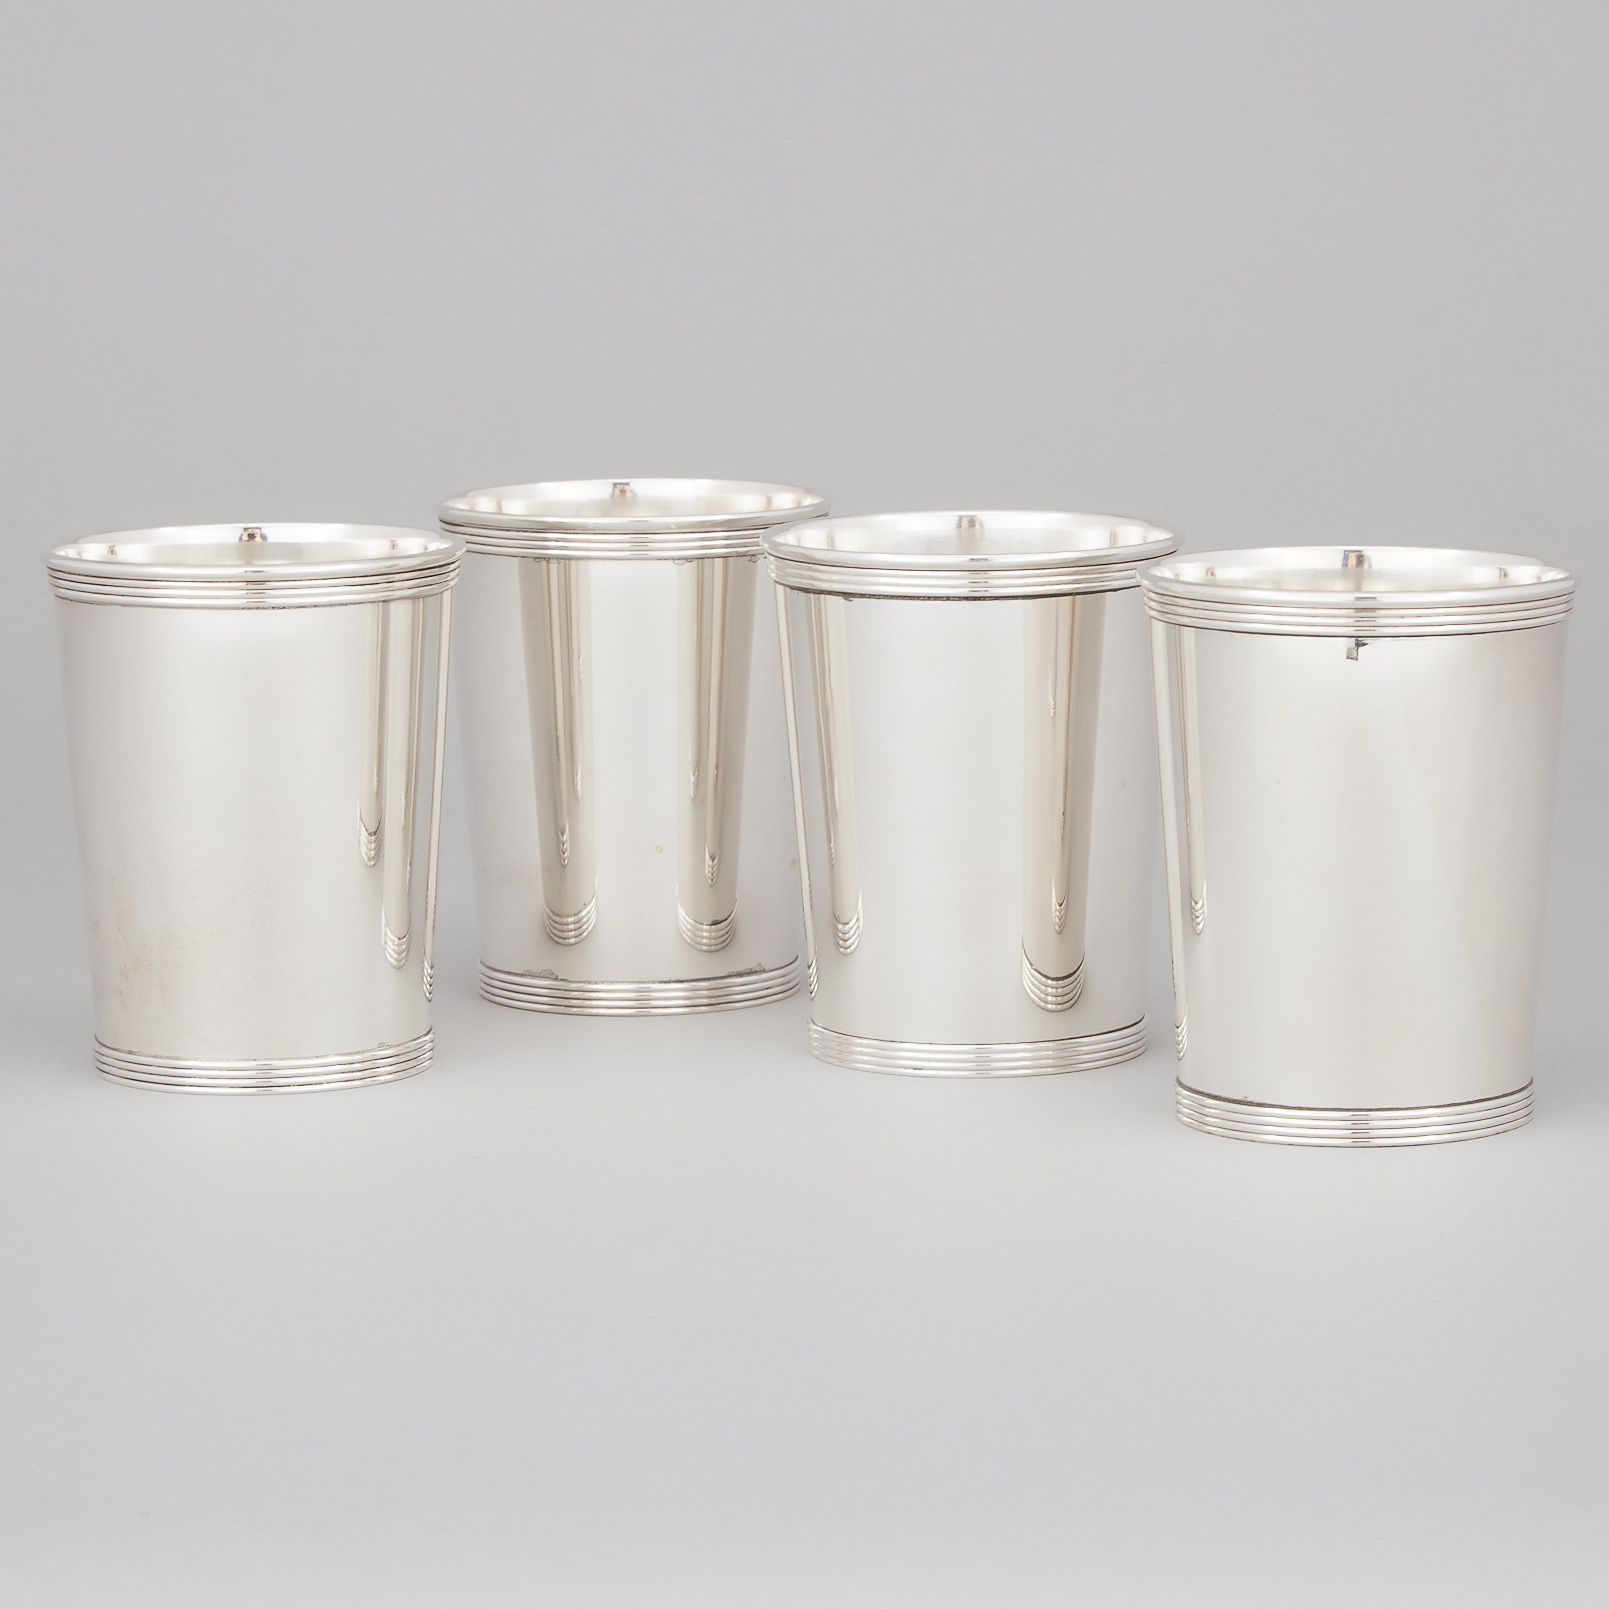 Four American Silver Beakers, Alvin Mfg. Co., Providence, R.I., 20th century